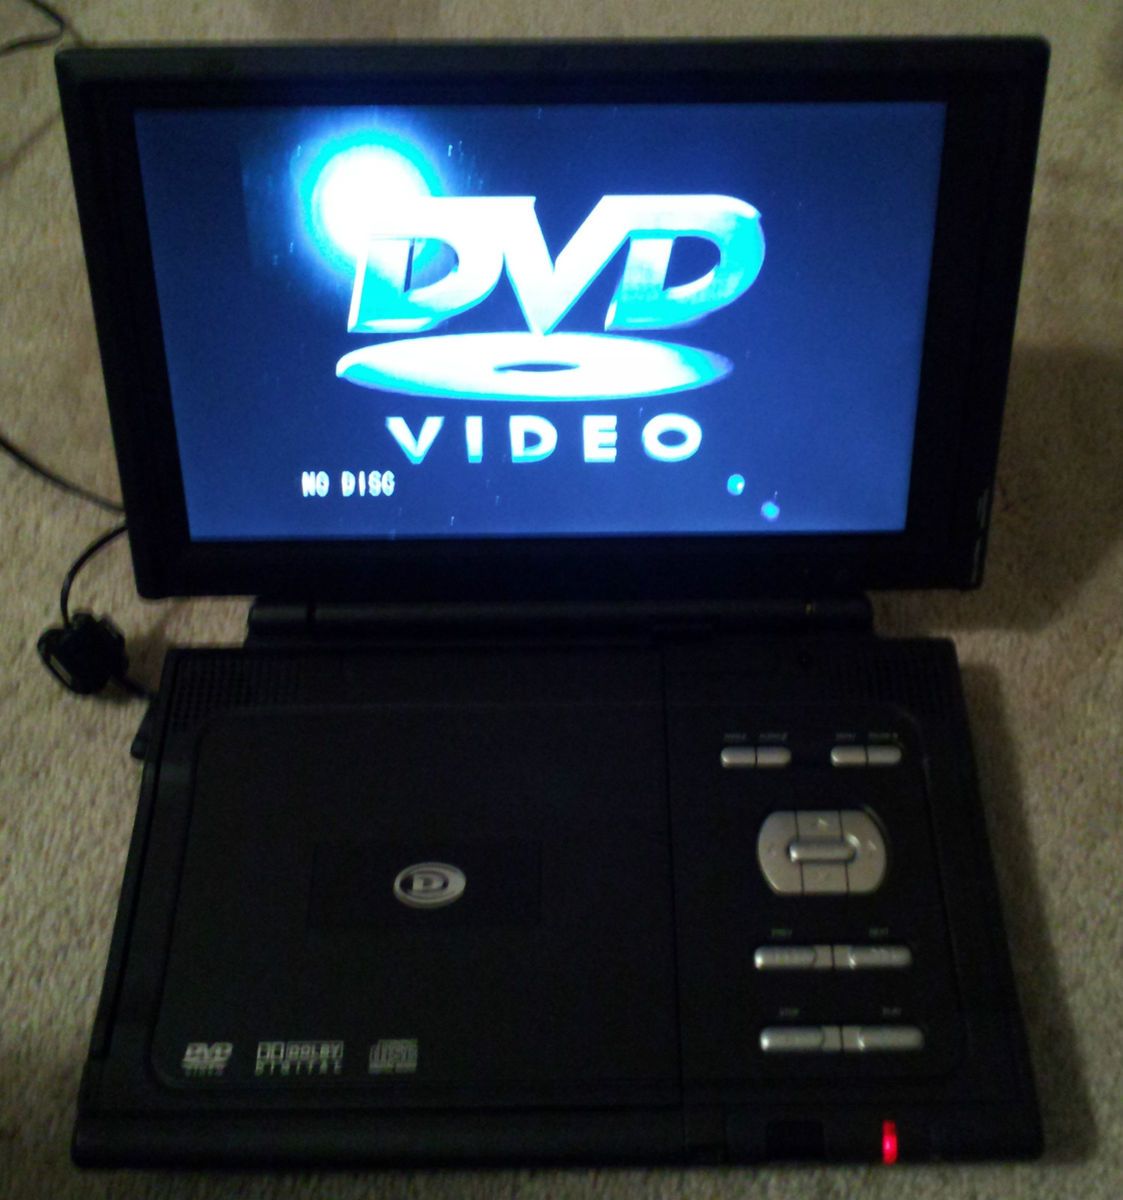  Durabrand Portable DVD Player